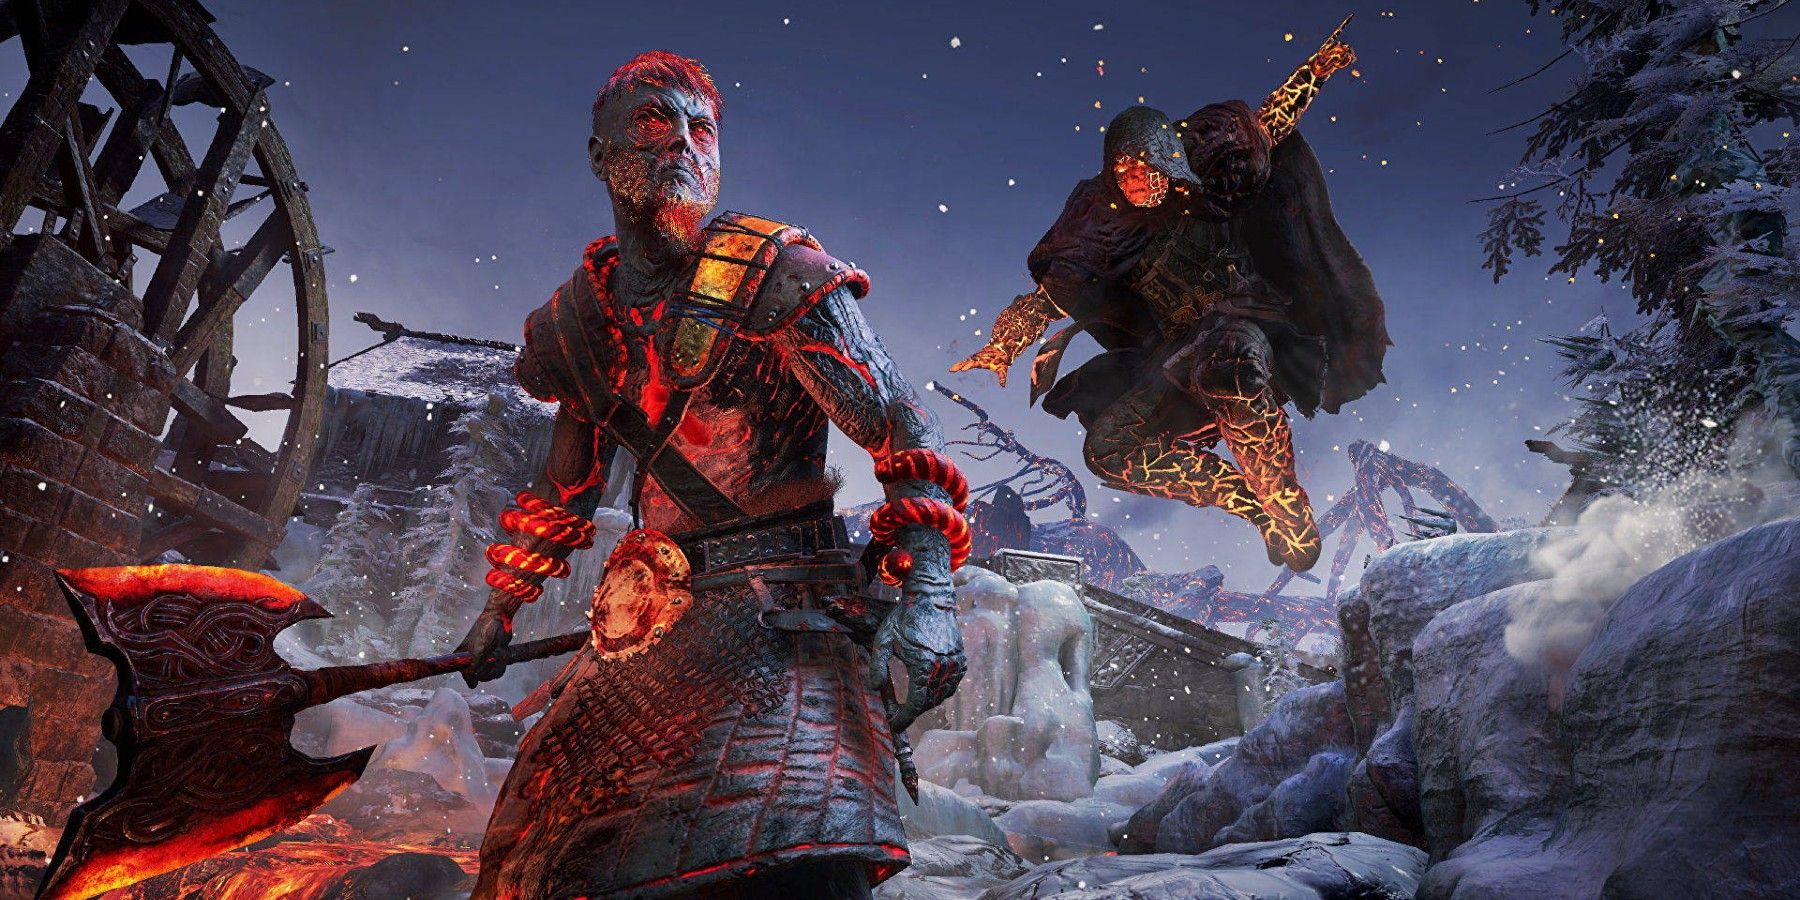 Assasisn's Creed Valhalla Fire Giant armor set Eivor jumping axe-wielding soldier